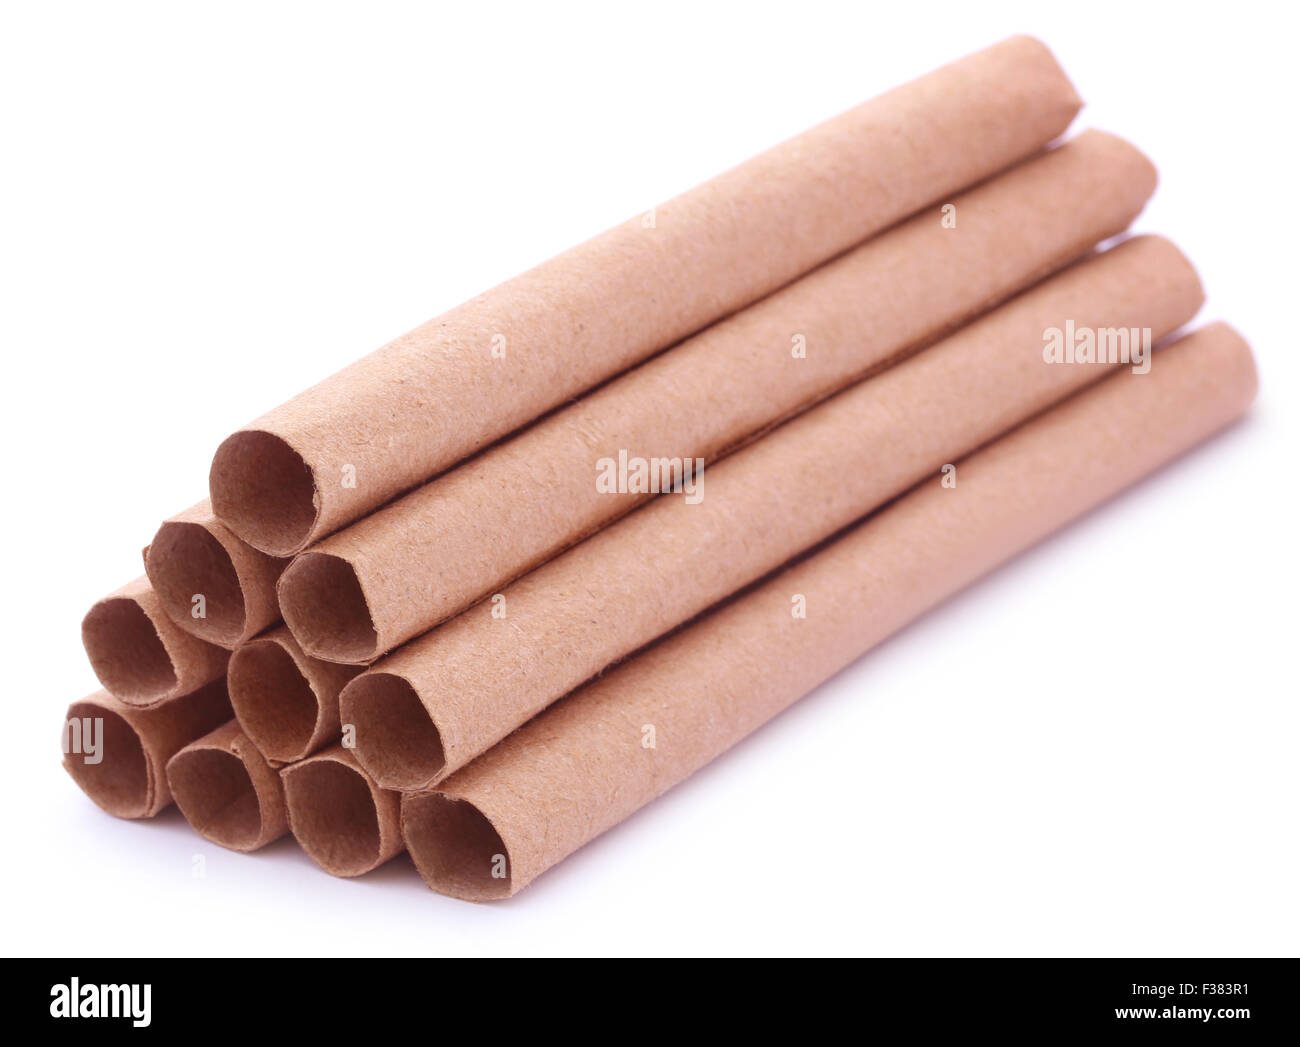 Paper rolls for making cigarette Stock Photo